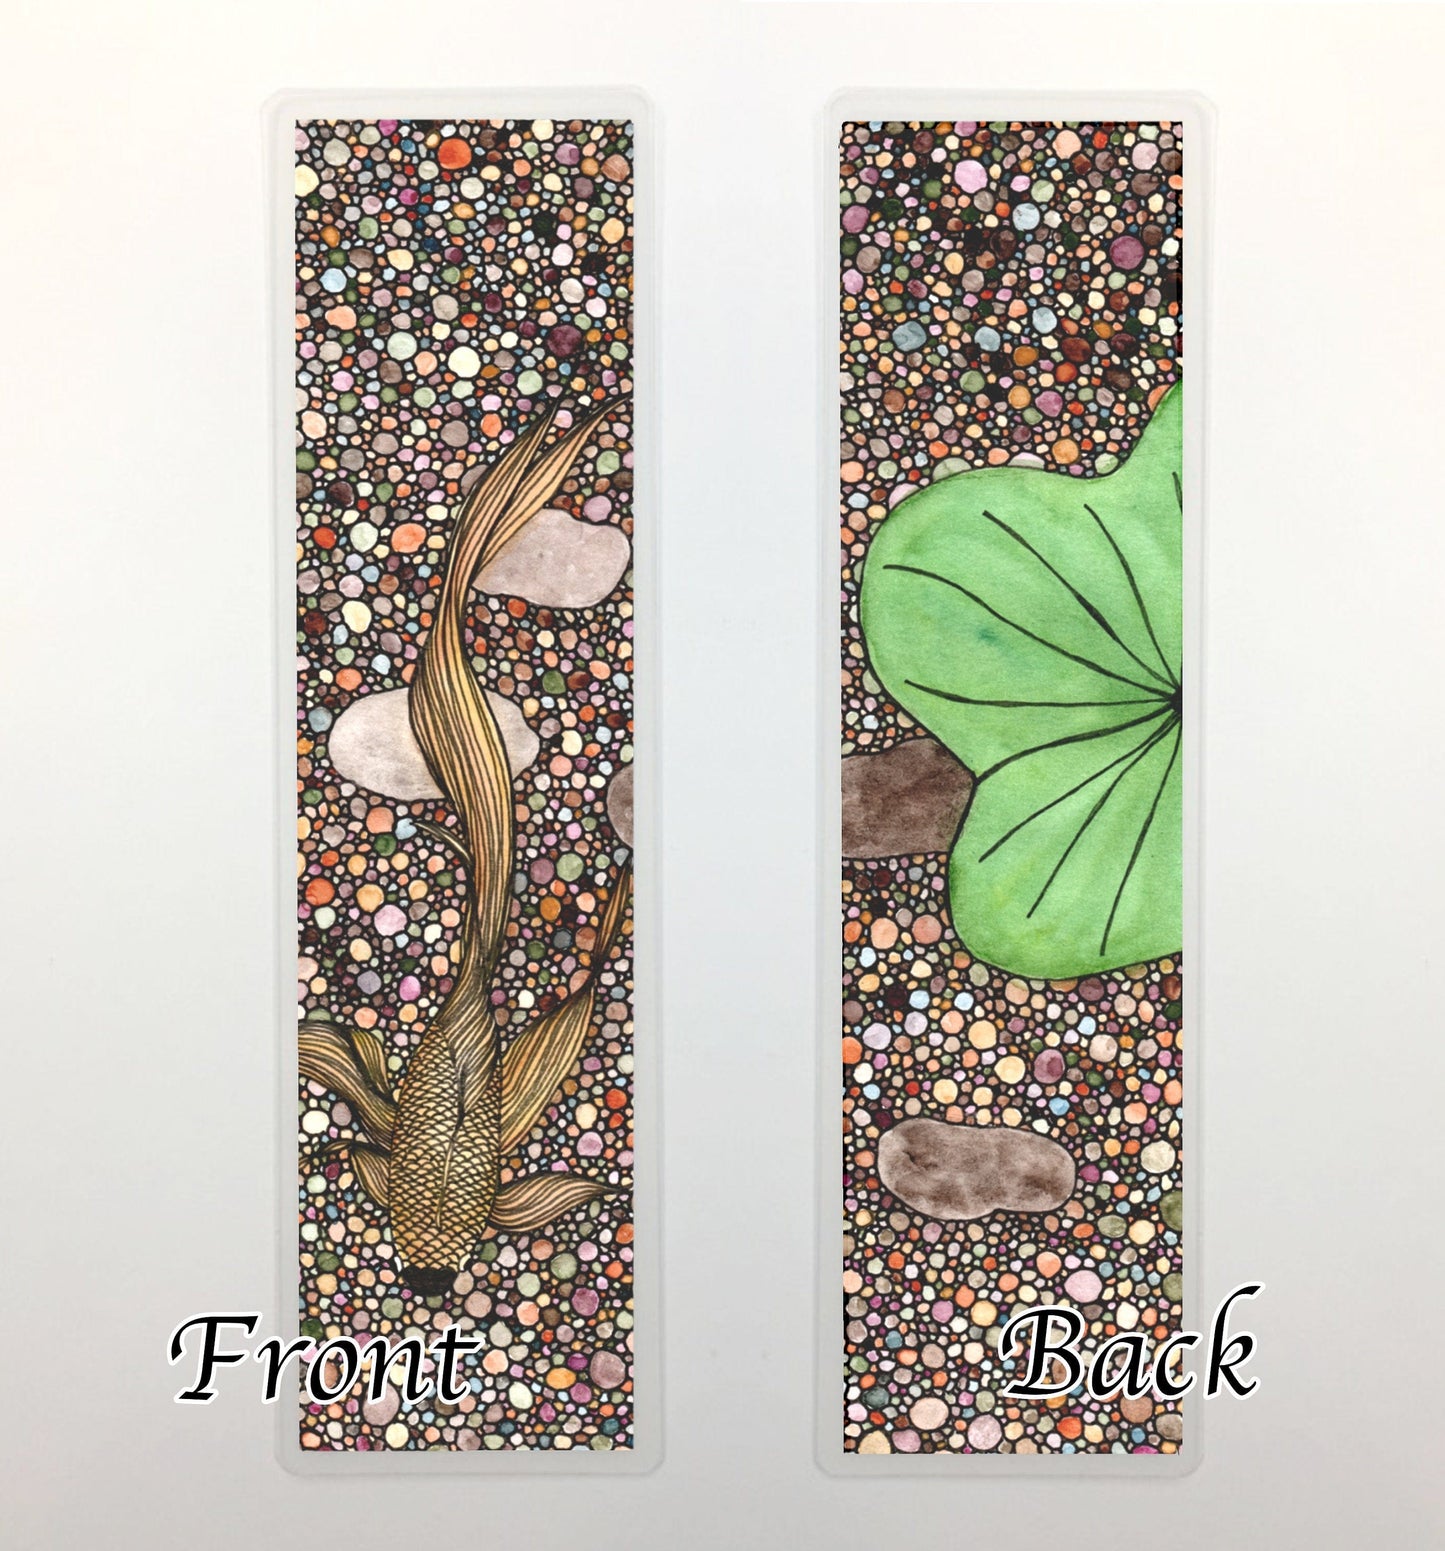 PinkPolish Design Bookmarks "Pebbles" 2-Sided Bookmark